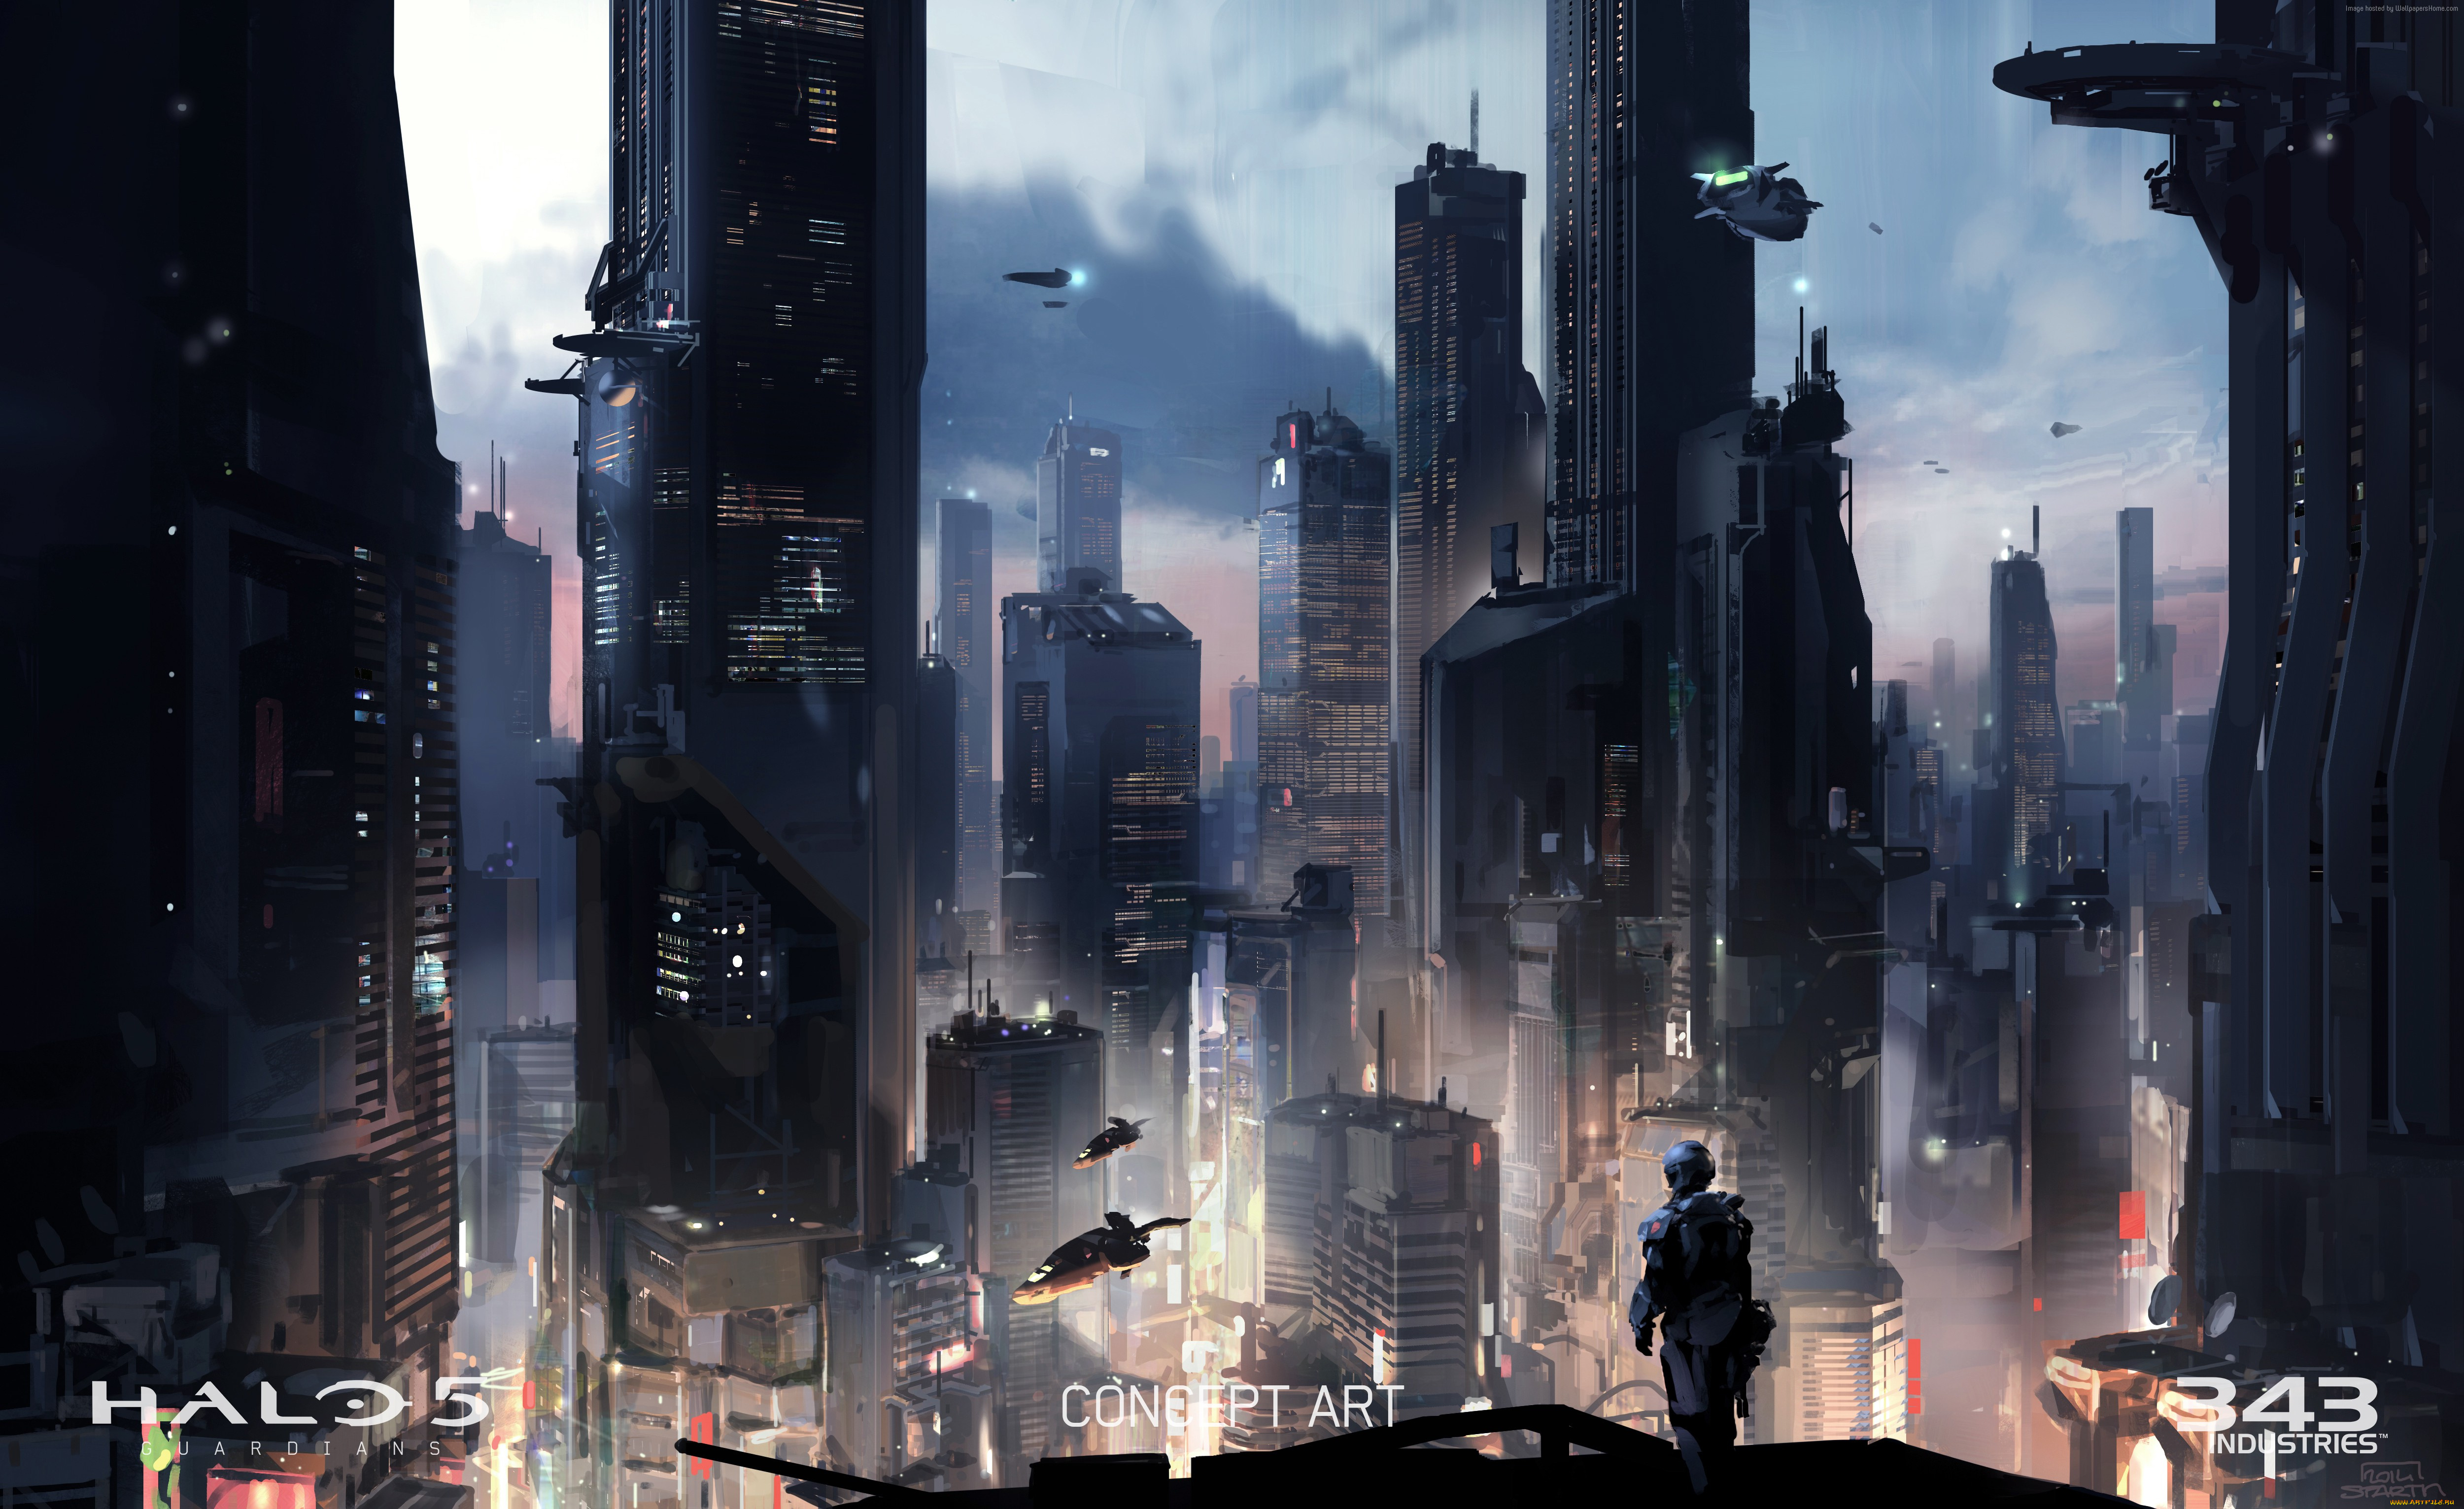 Sci fi games. Хало 5 город. Cyberpunk Concept Art город. Хало 5 концепт арт.